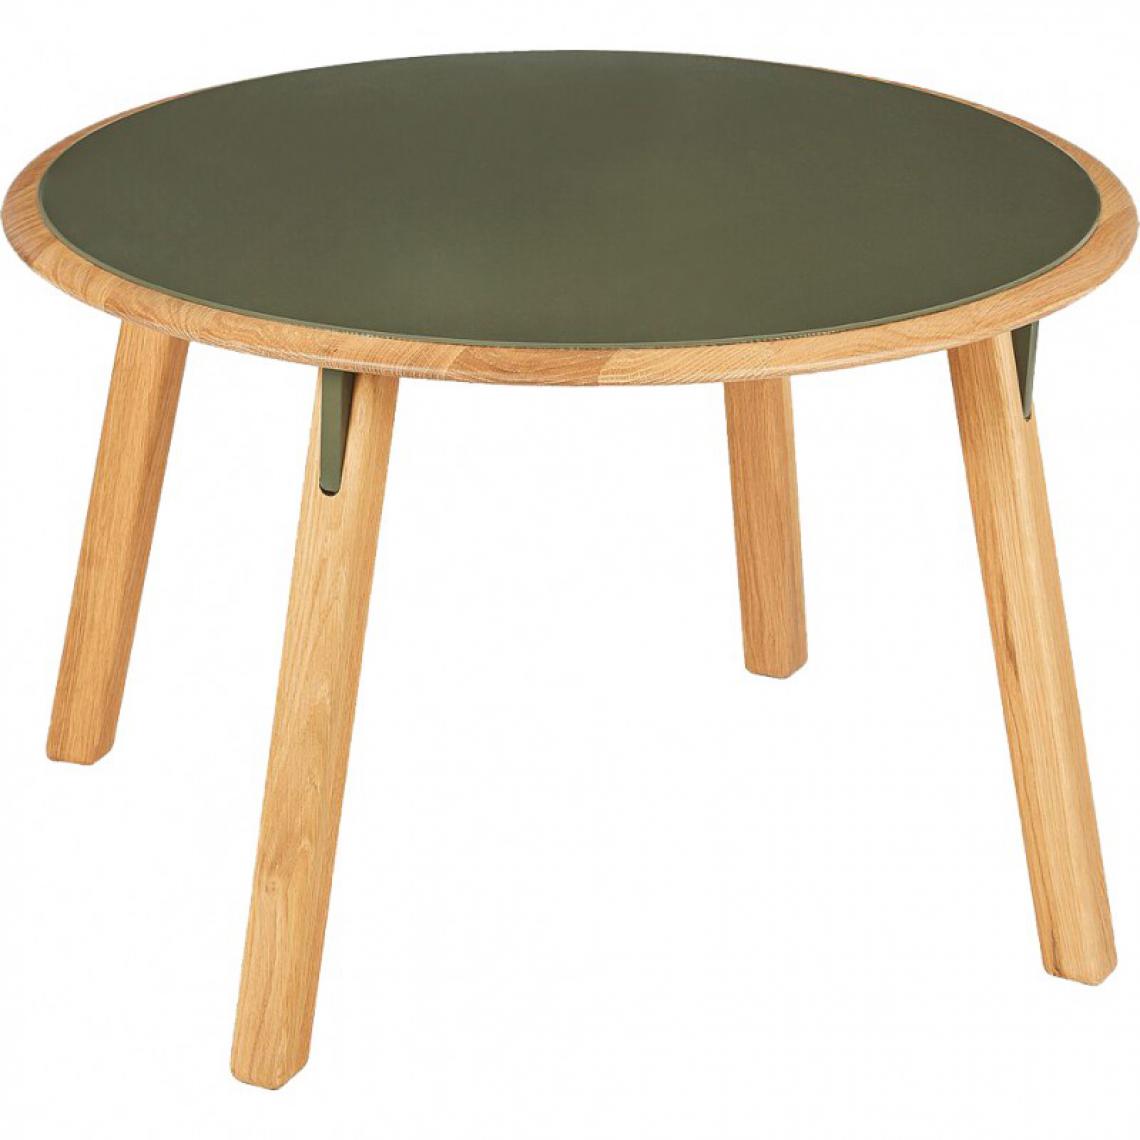 Meubletmoi - Table basse ronde en chêne massif et métal vert cèdre - KAZI 6700 - Tables basses